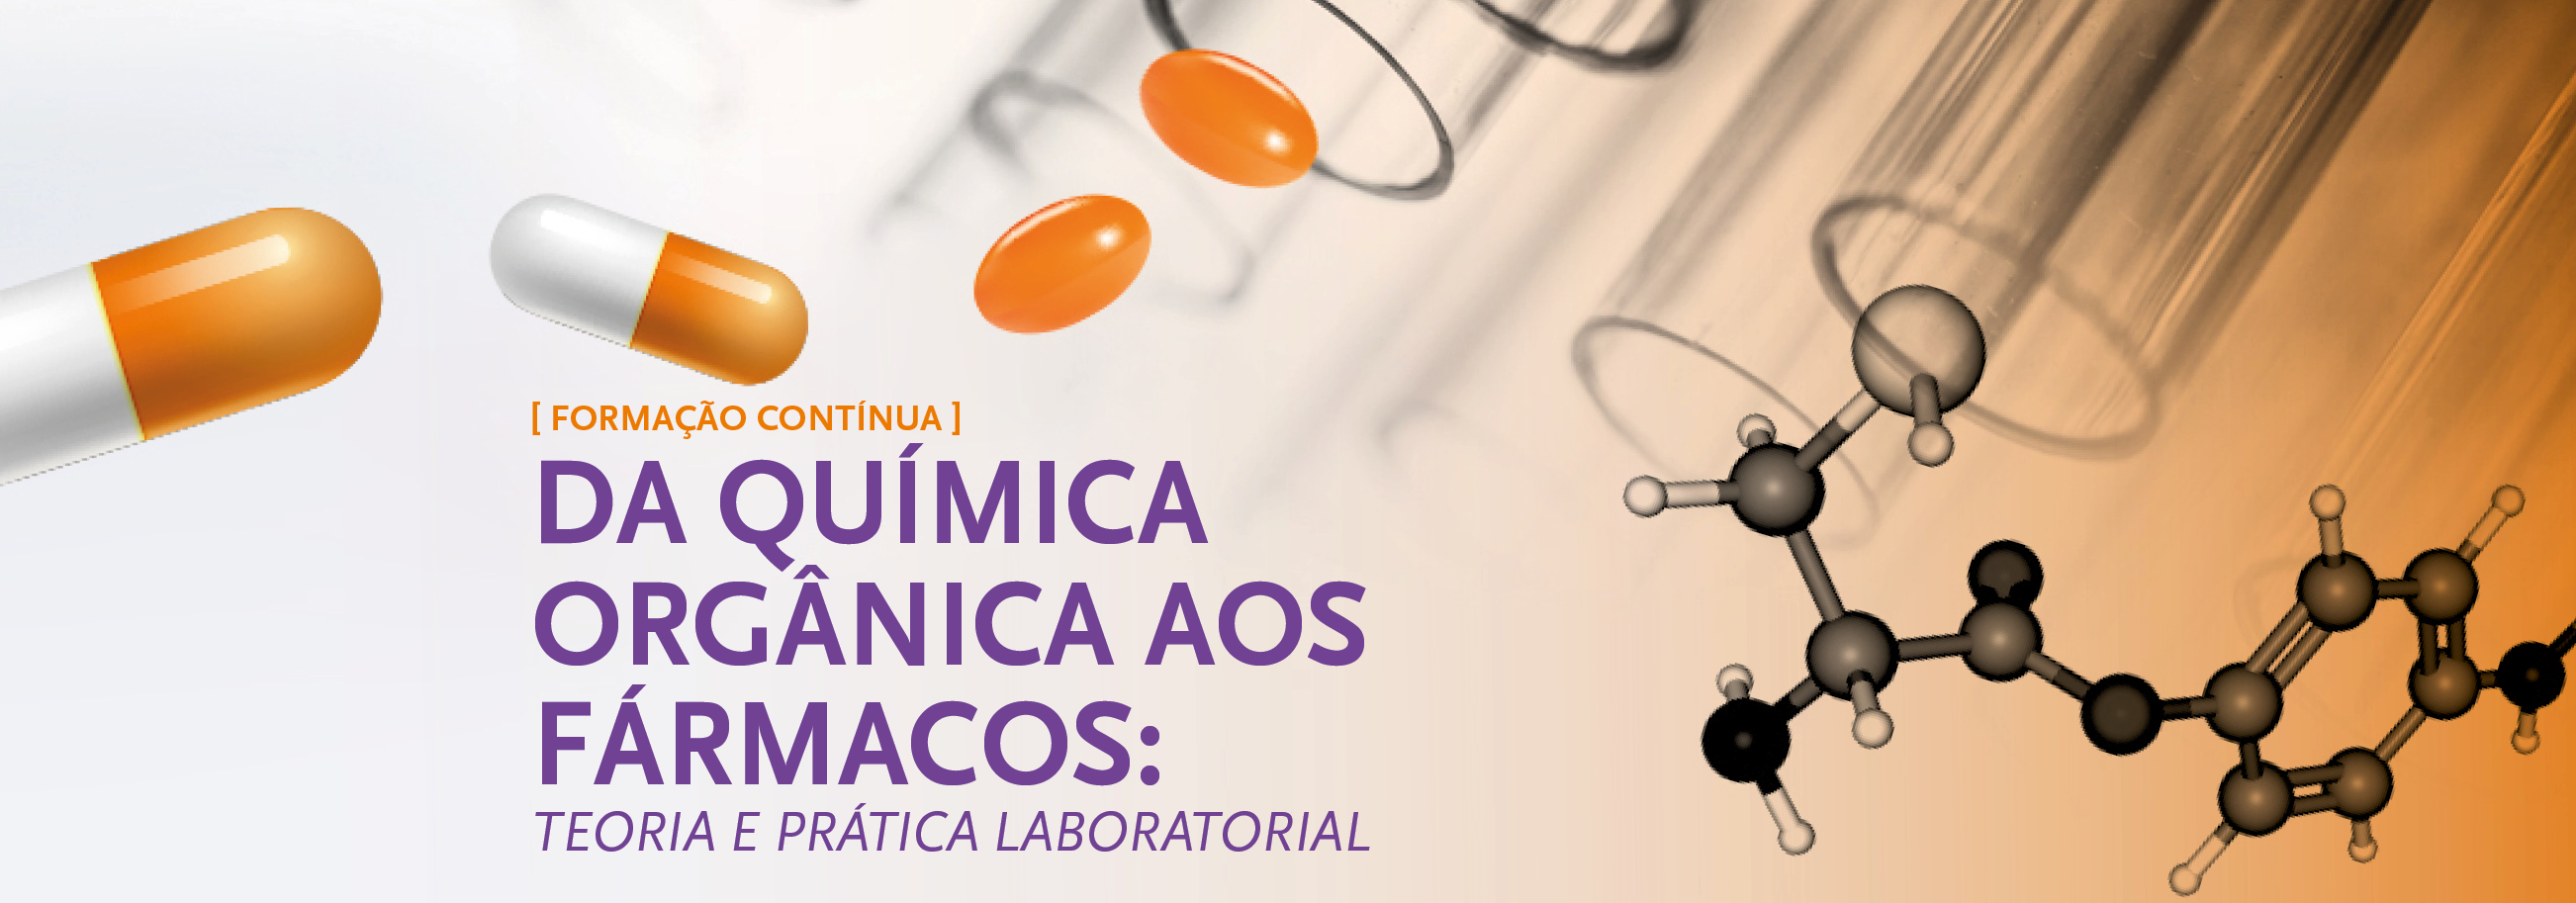 Da Qumica Orgnica aos Frmacos: teoria e prtica laboratorial.